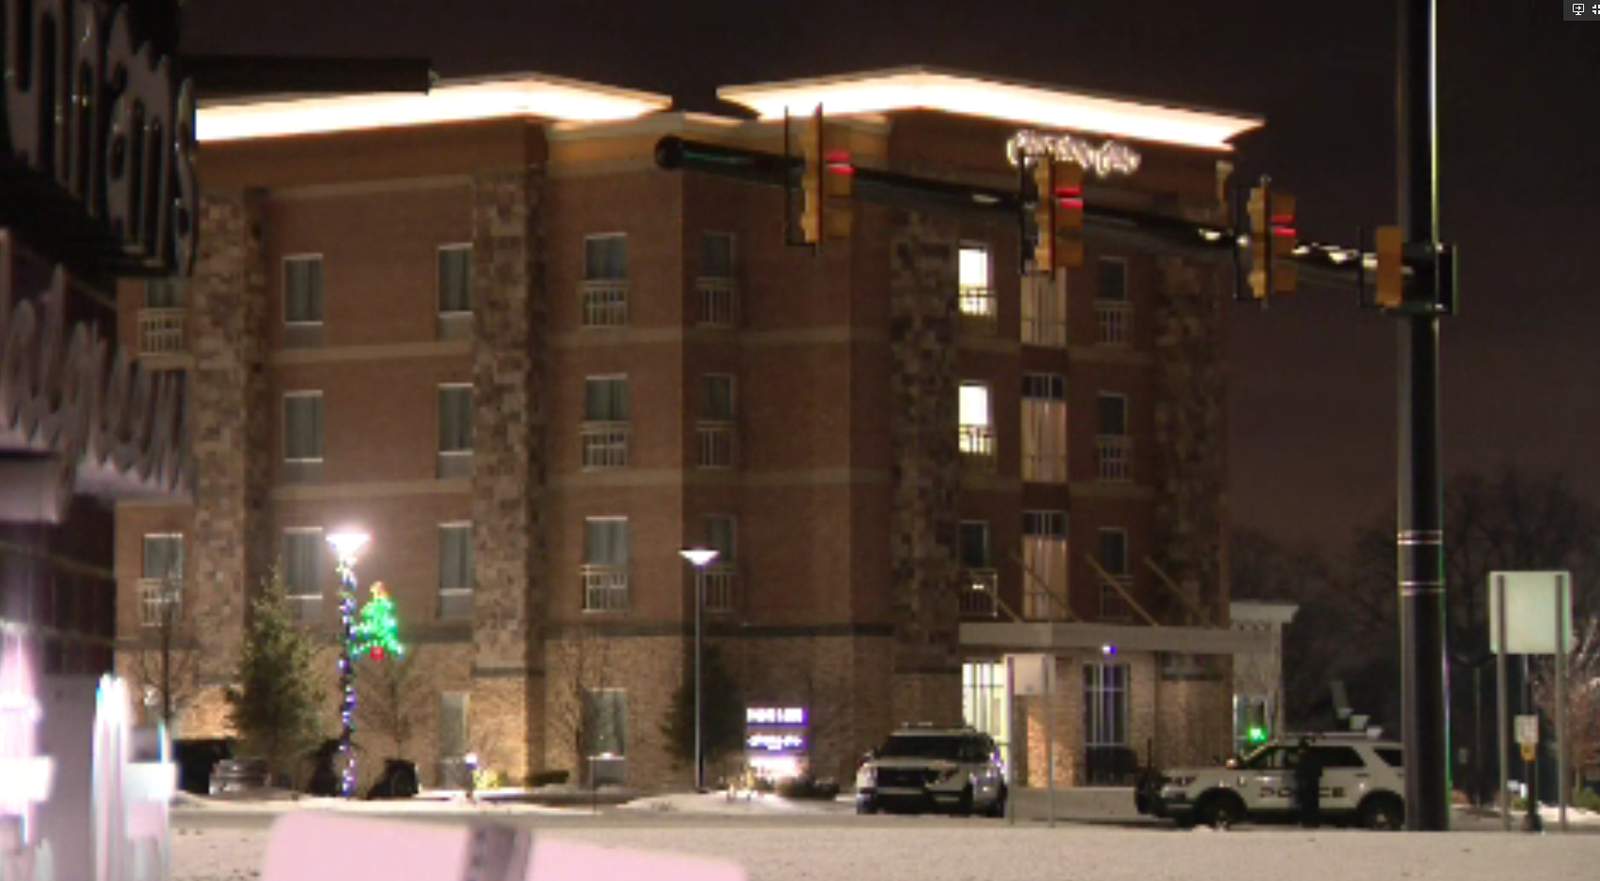 Man who barricaded himself inside West Bloomfield hotel taken into custody, police say